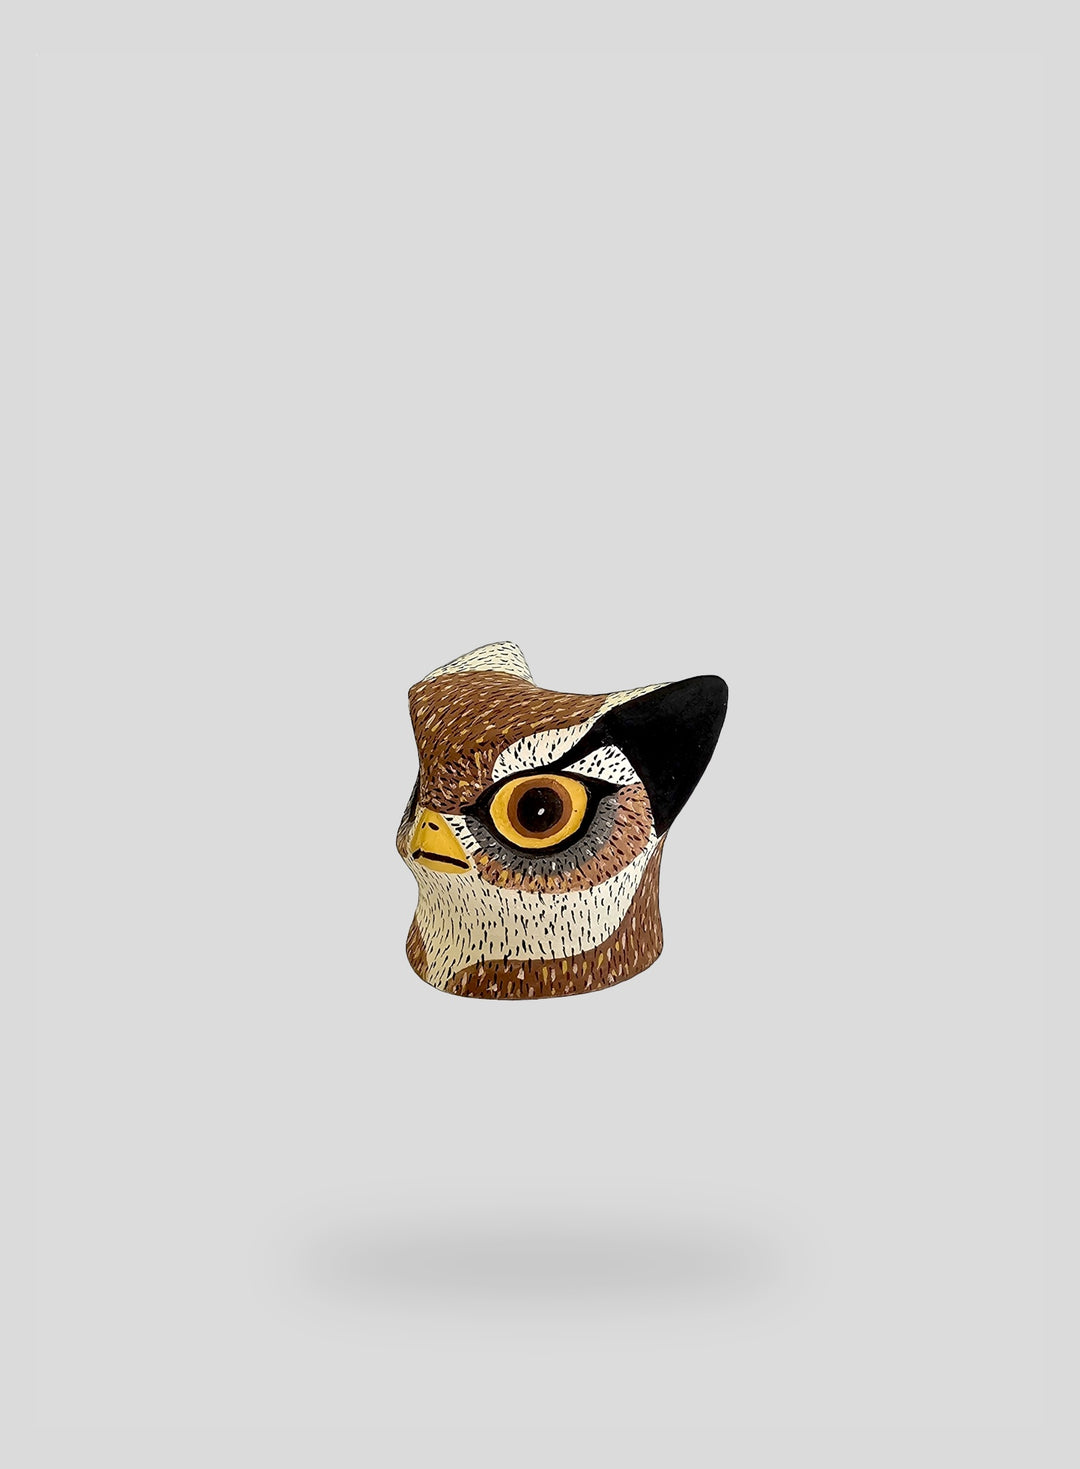 The Mini Horned Owl Sculpture